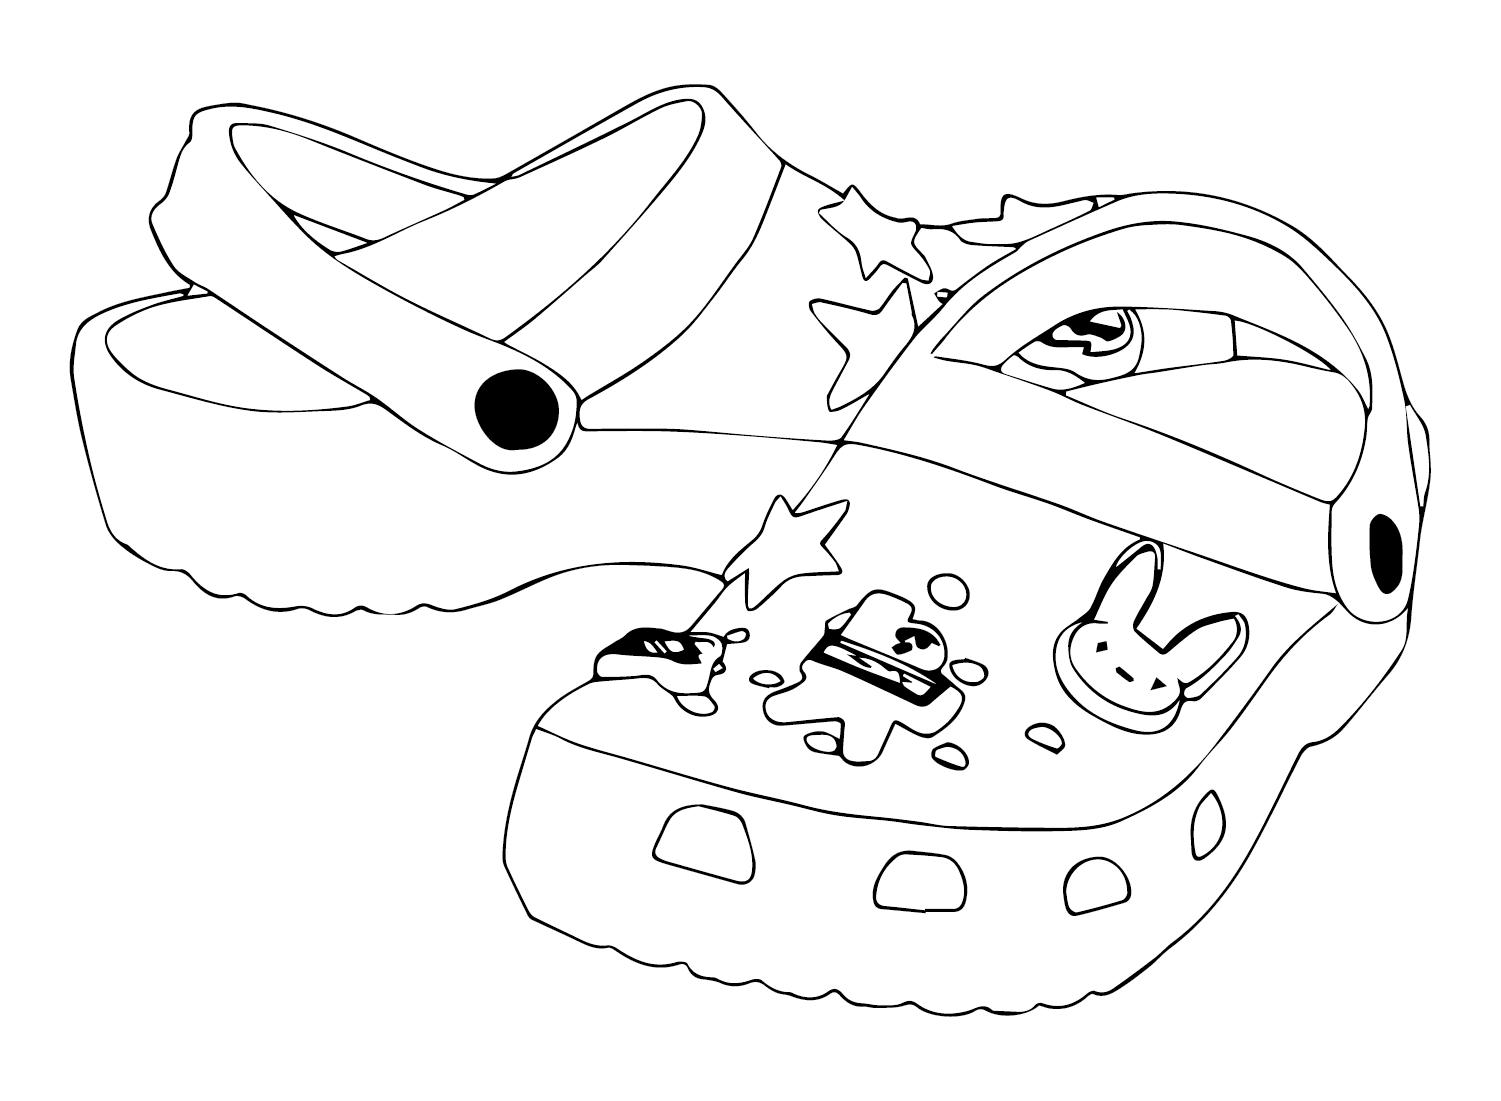 Crocs Croc Pinclipart Listimg Sketch Coloring Page